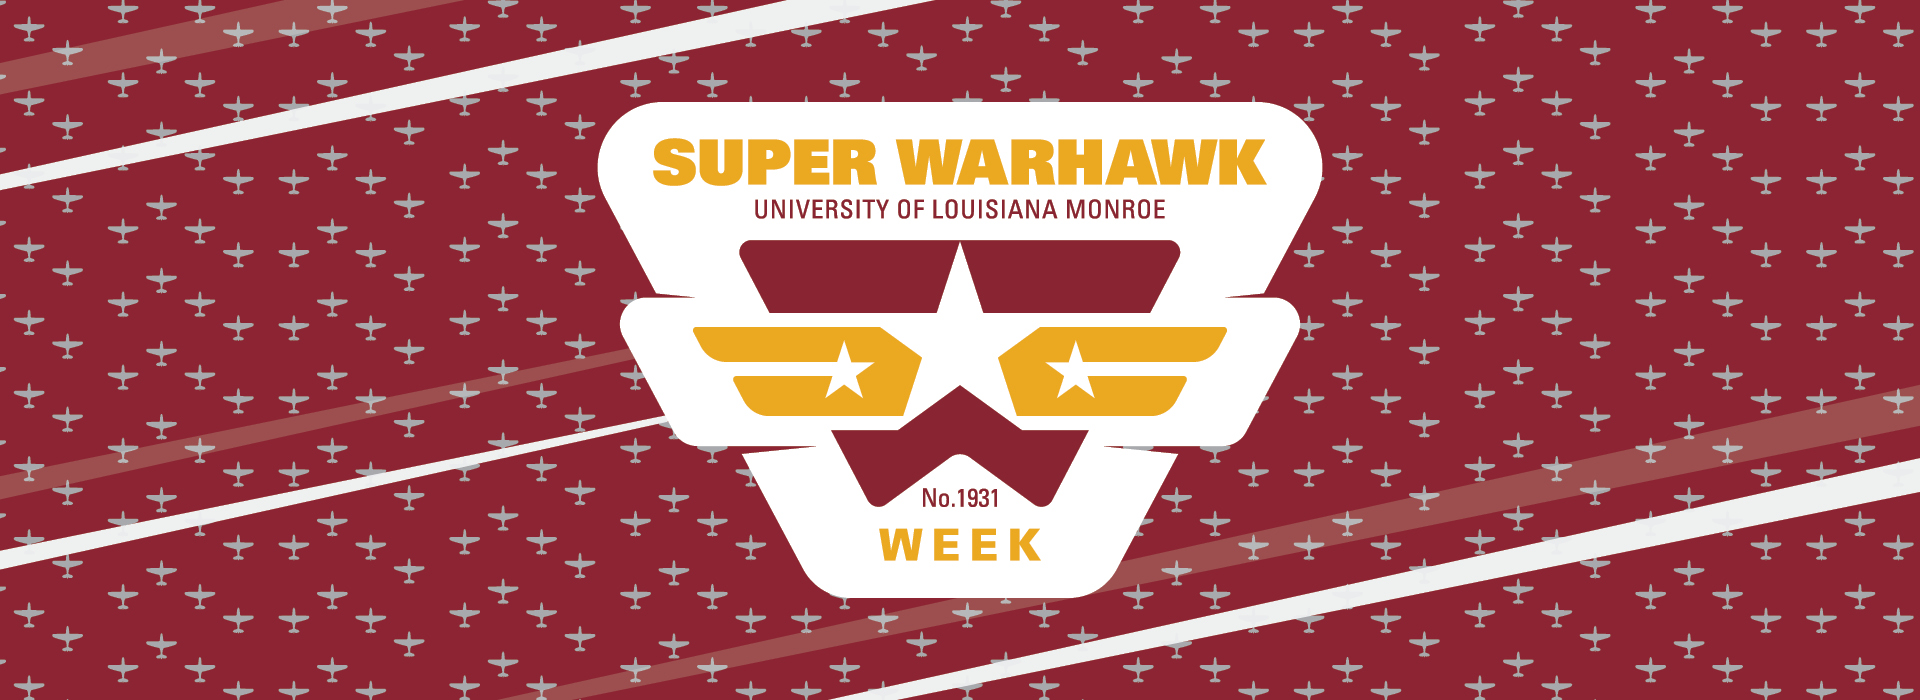 ULM Super Warhawk Week banner